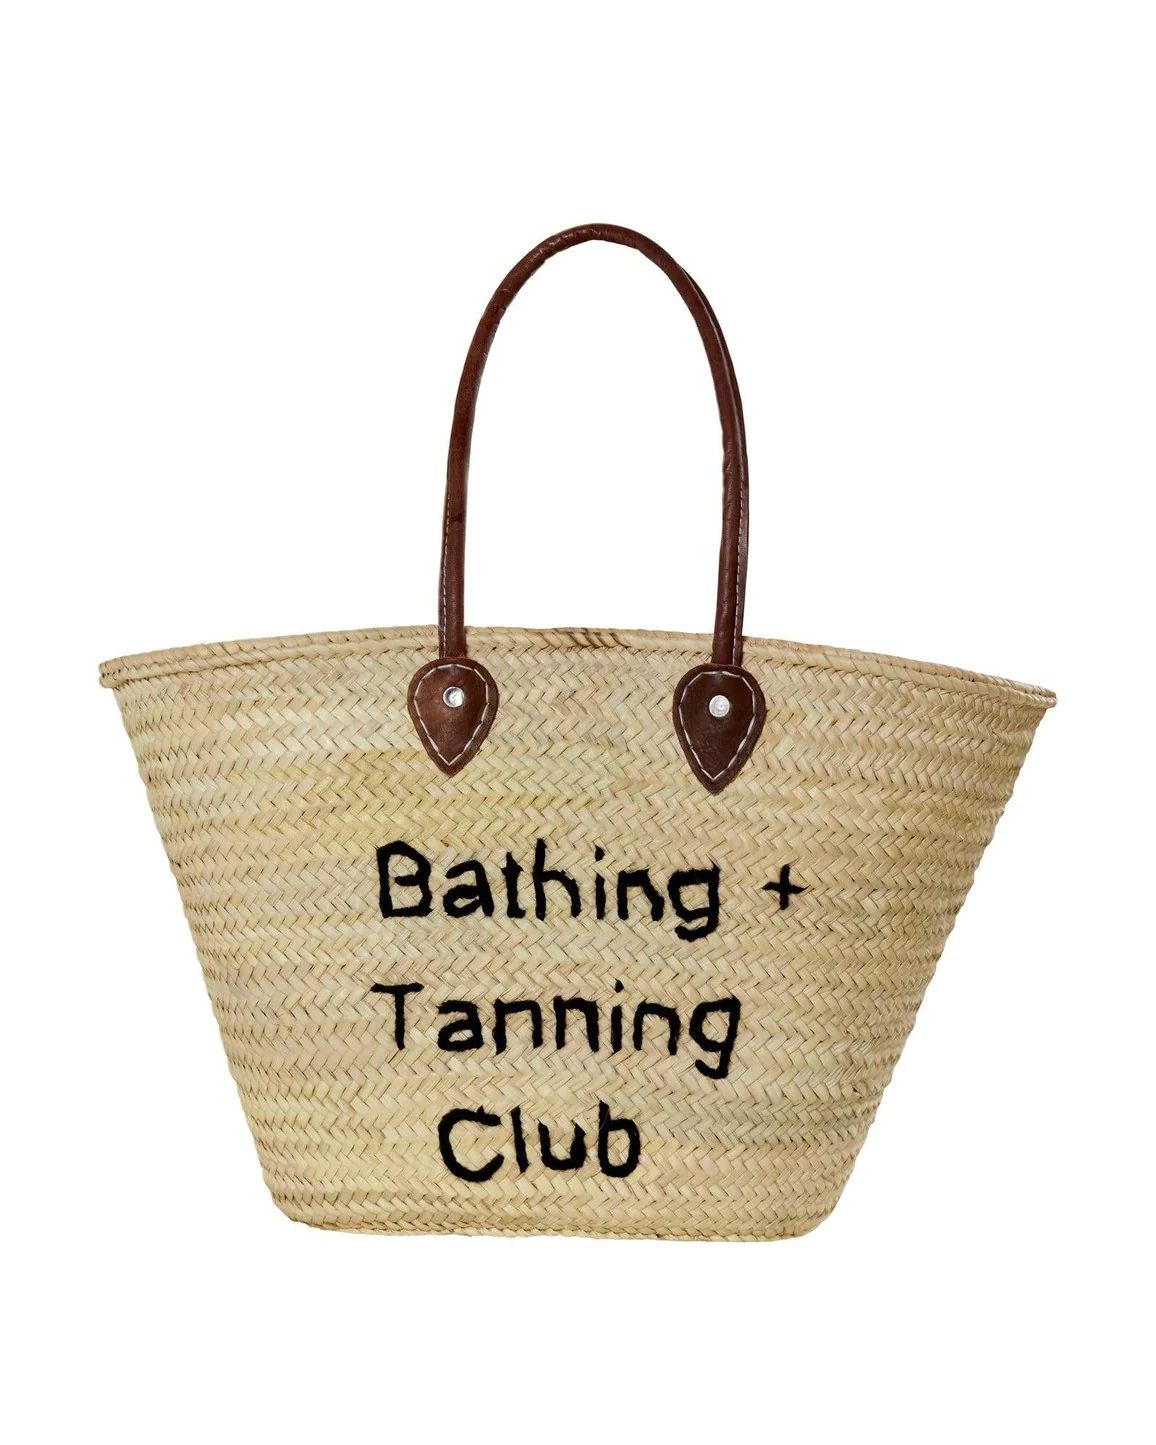 Bathing + Tanning Club Tote | Poolside